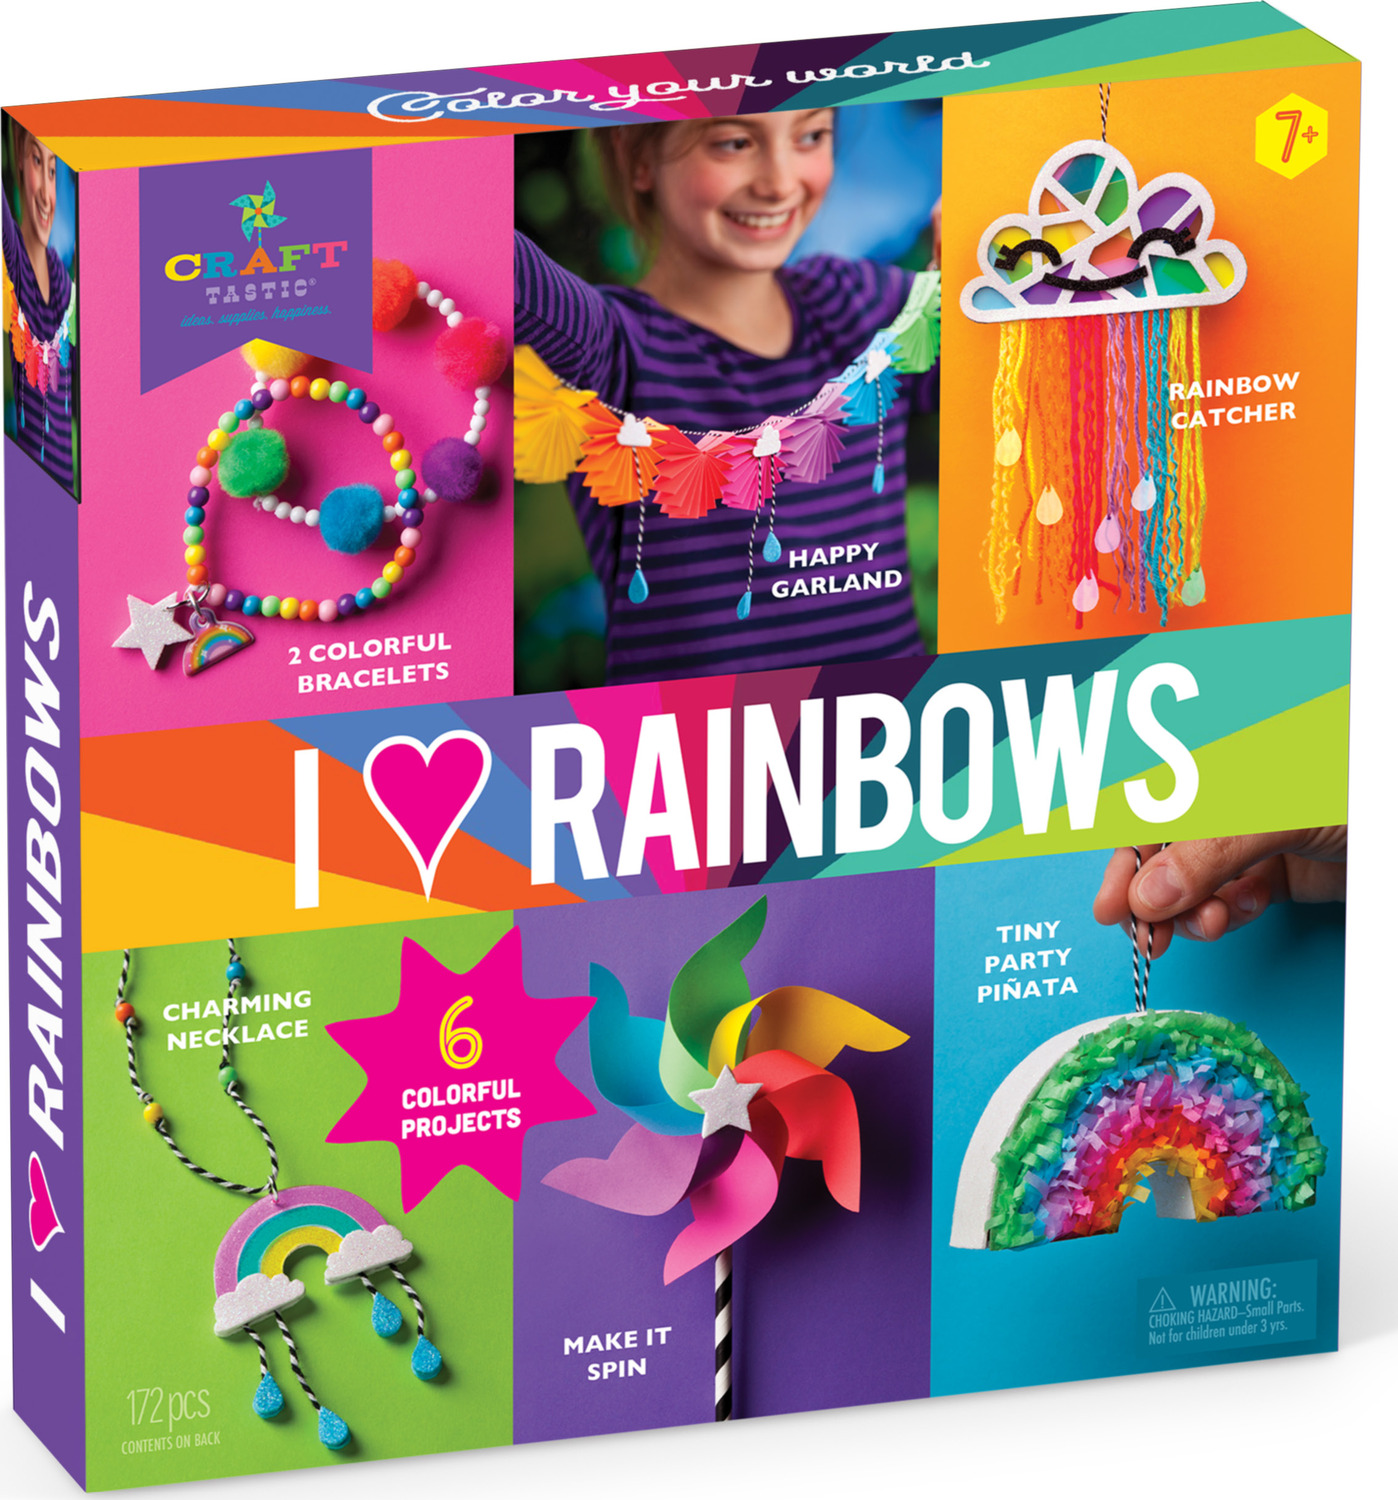 Rainbow Paper Craft Kit